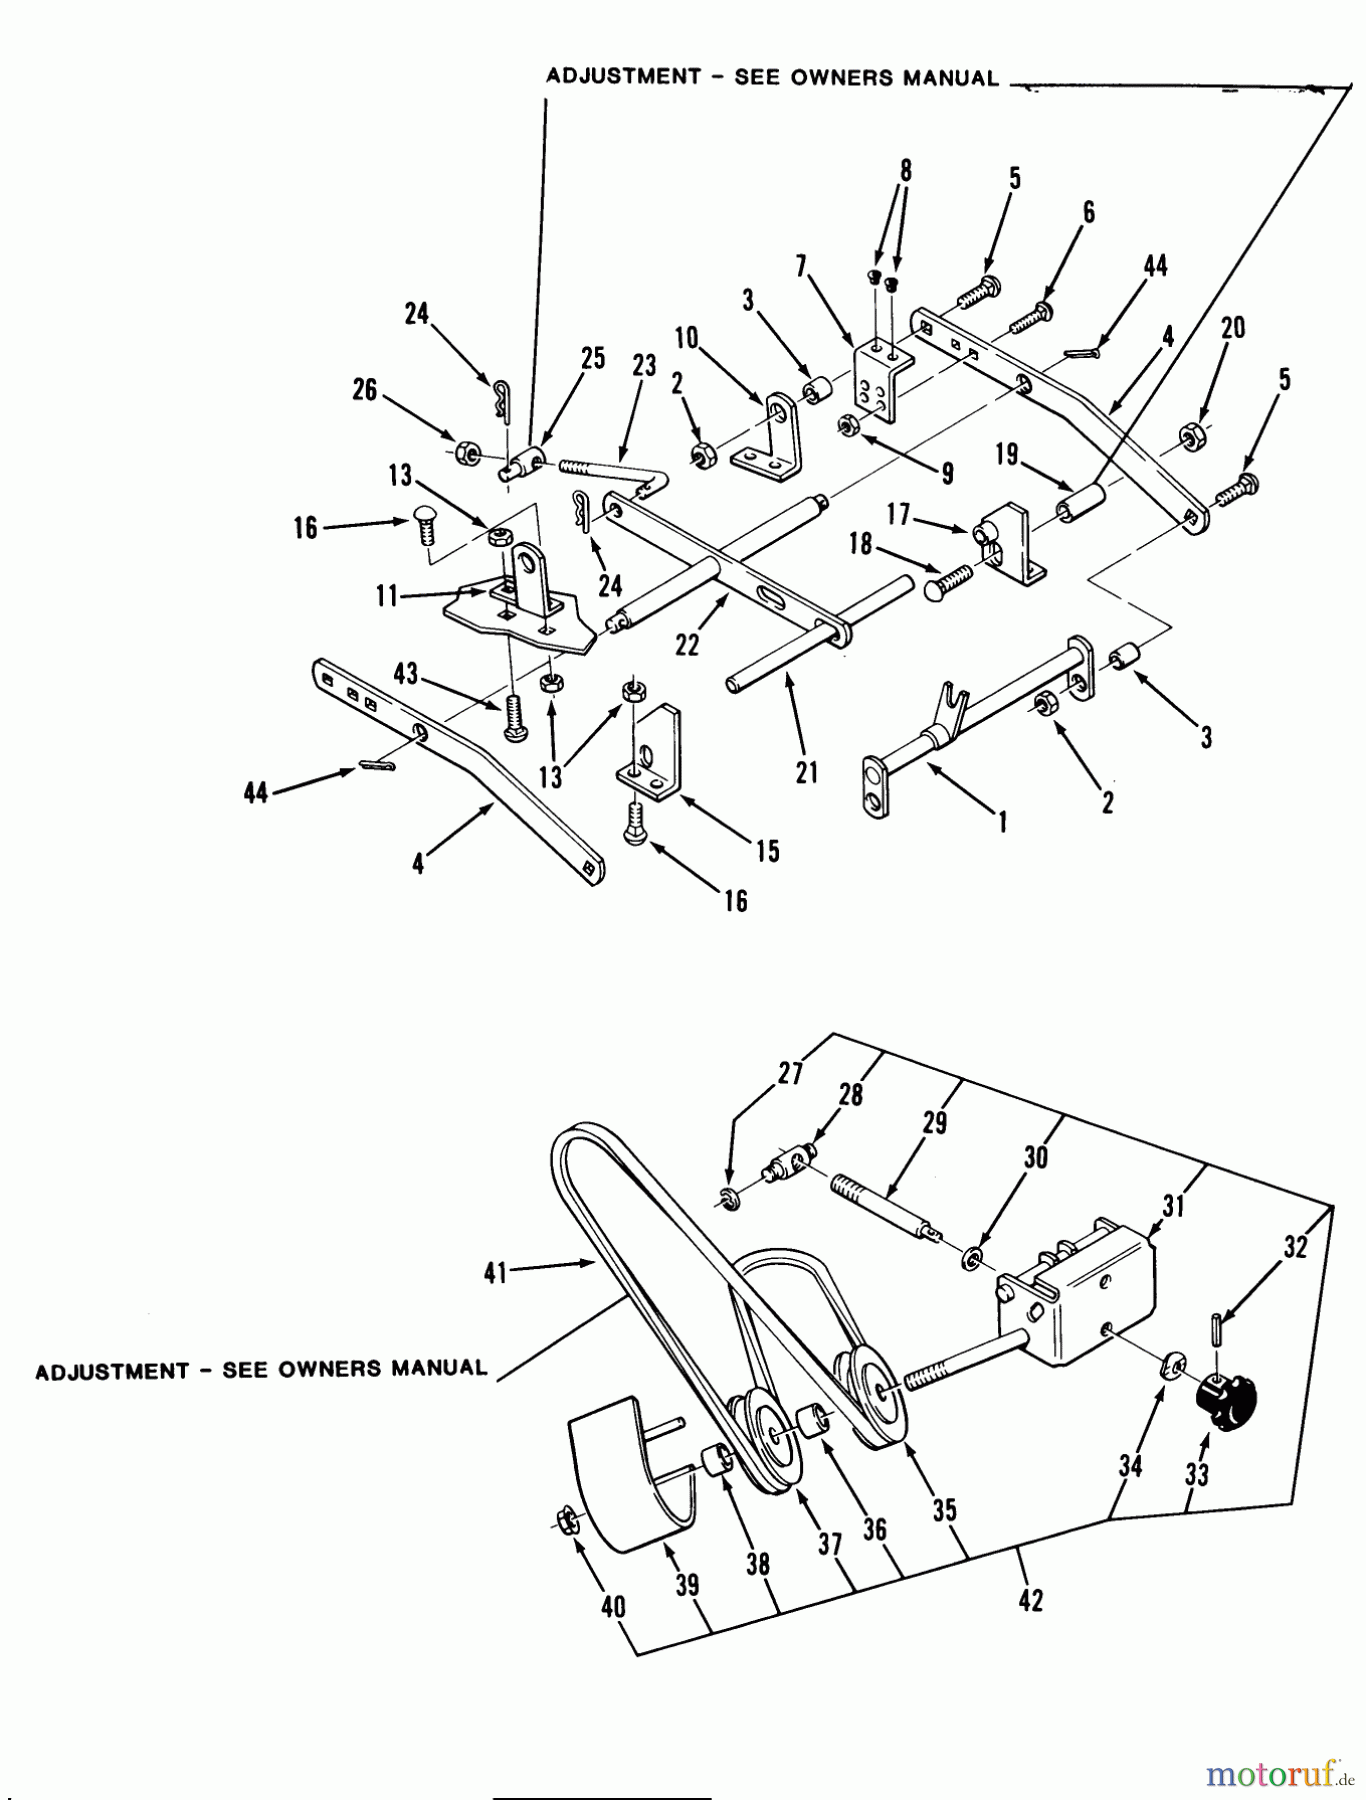  Toro Neu Mowers, Deck Assembly Only 05-37SC02 - Toro 37